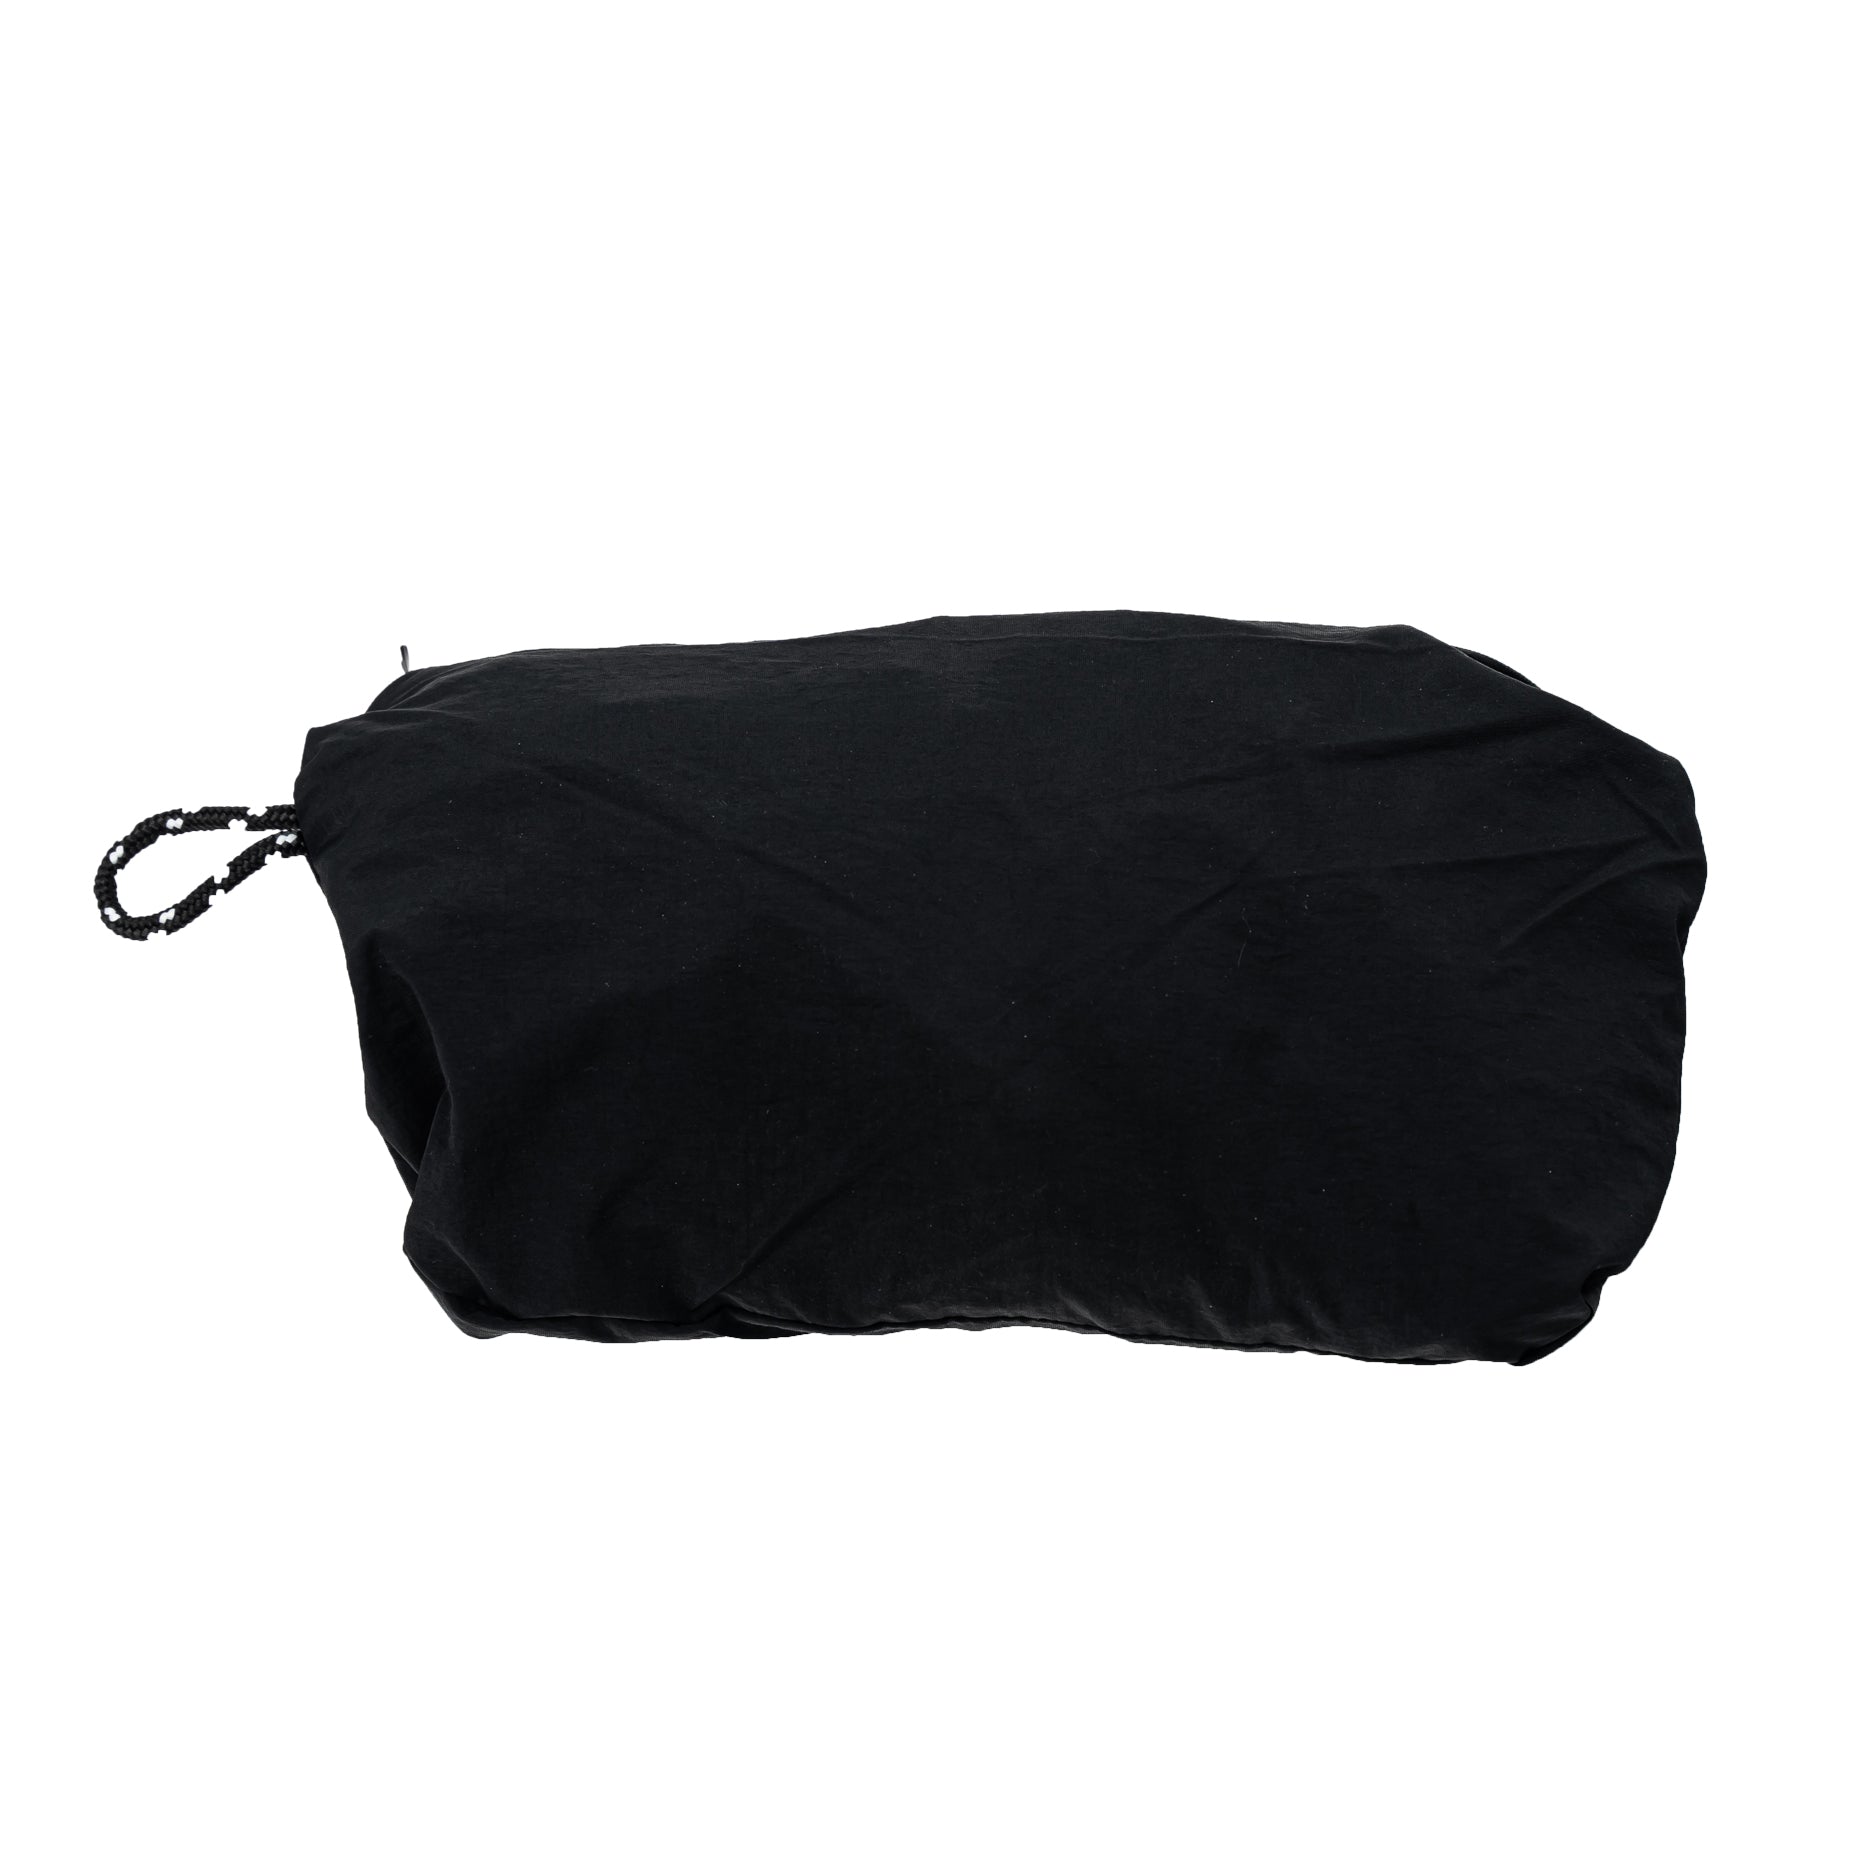 TOM'S Racing - Anorak (Packable) Jacket - Black